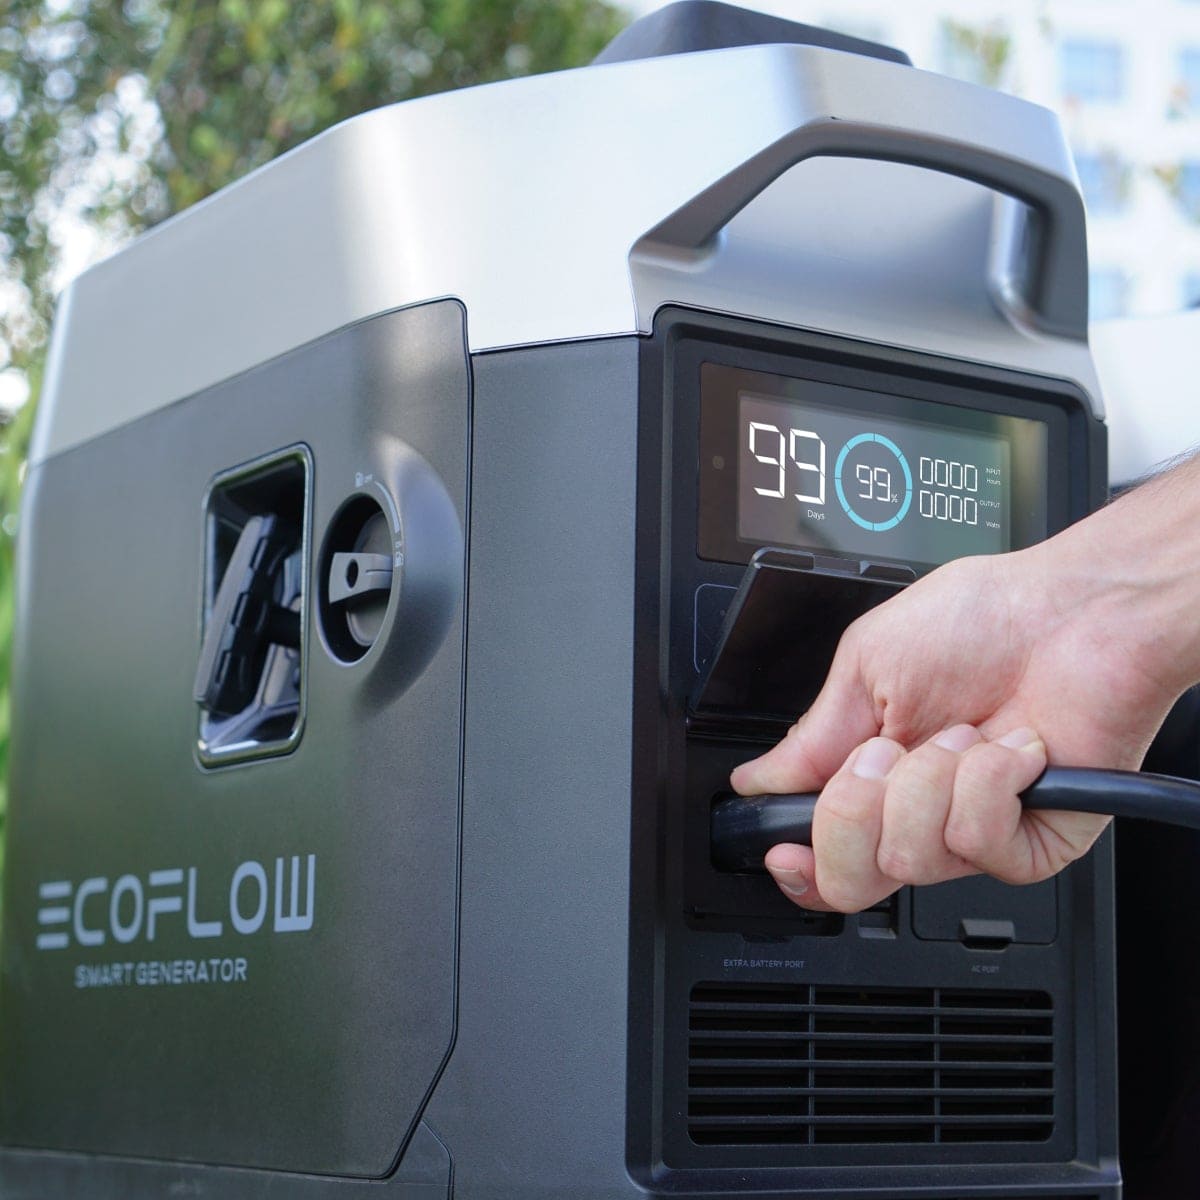 EcoFlow Smart Generator - Energiesparlösung von Ecoflow - EcoFlow Germany